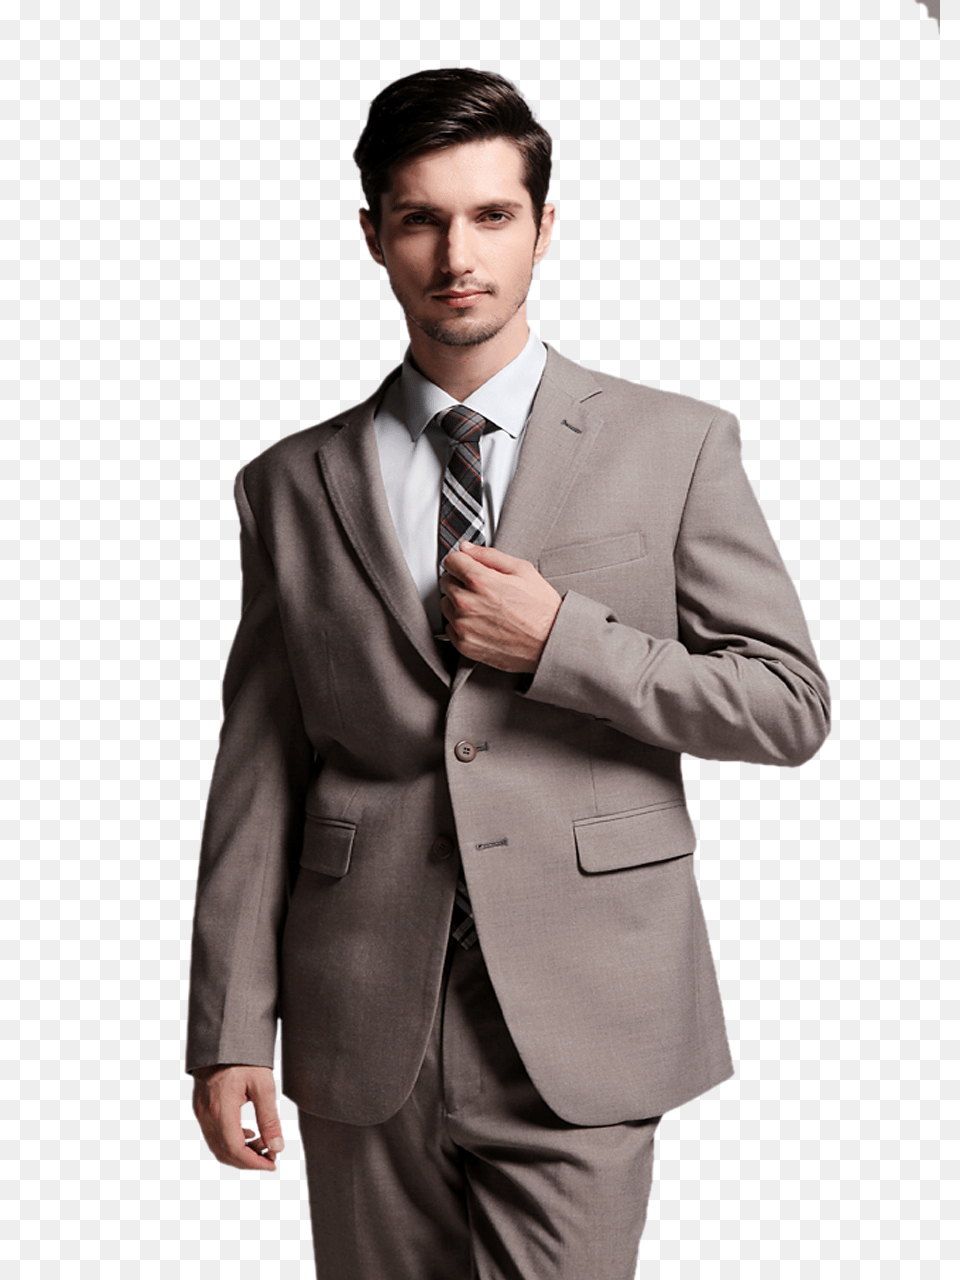 Suit, Accessories, Formal Wear, Tie, Coat Png Image